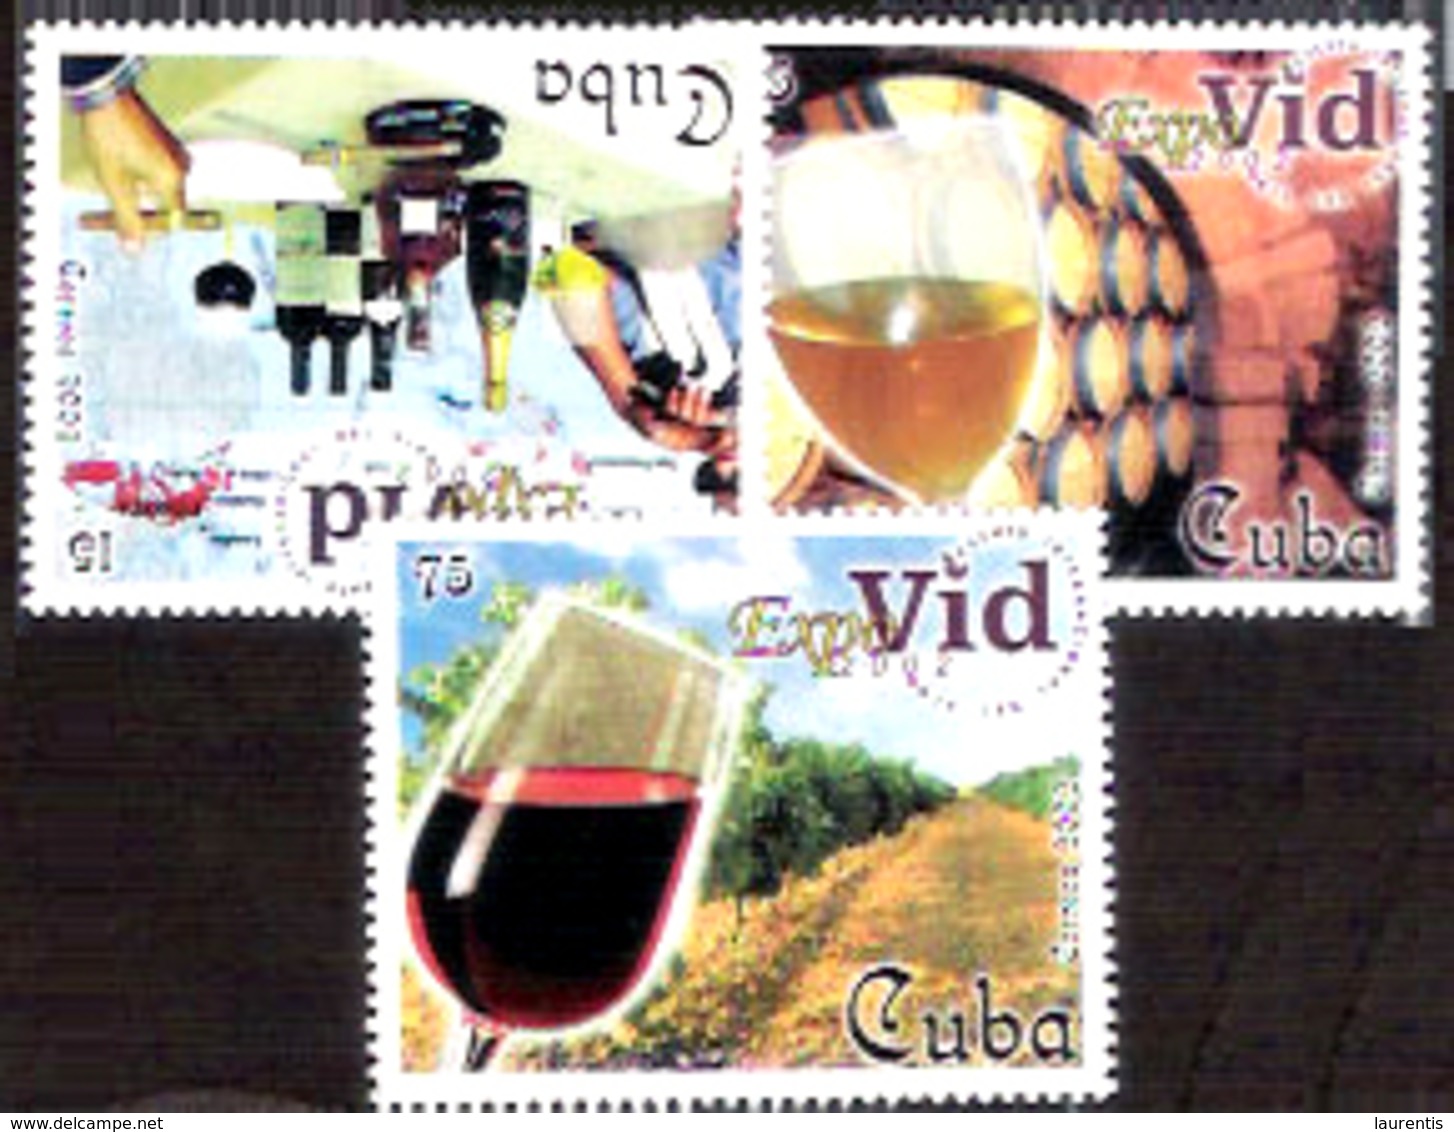 672  Wines - Vins - 2002 - MNH - Cb - 1,85 - Vinos Y Alcoholes